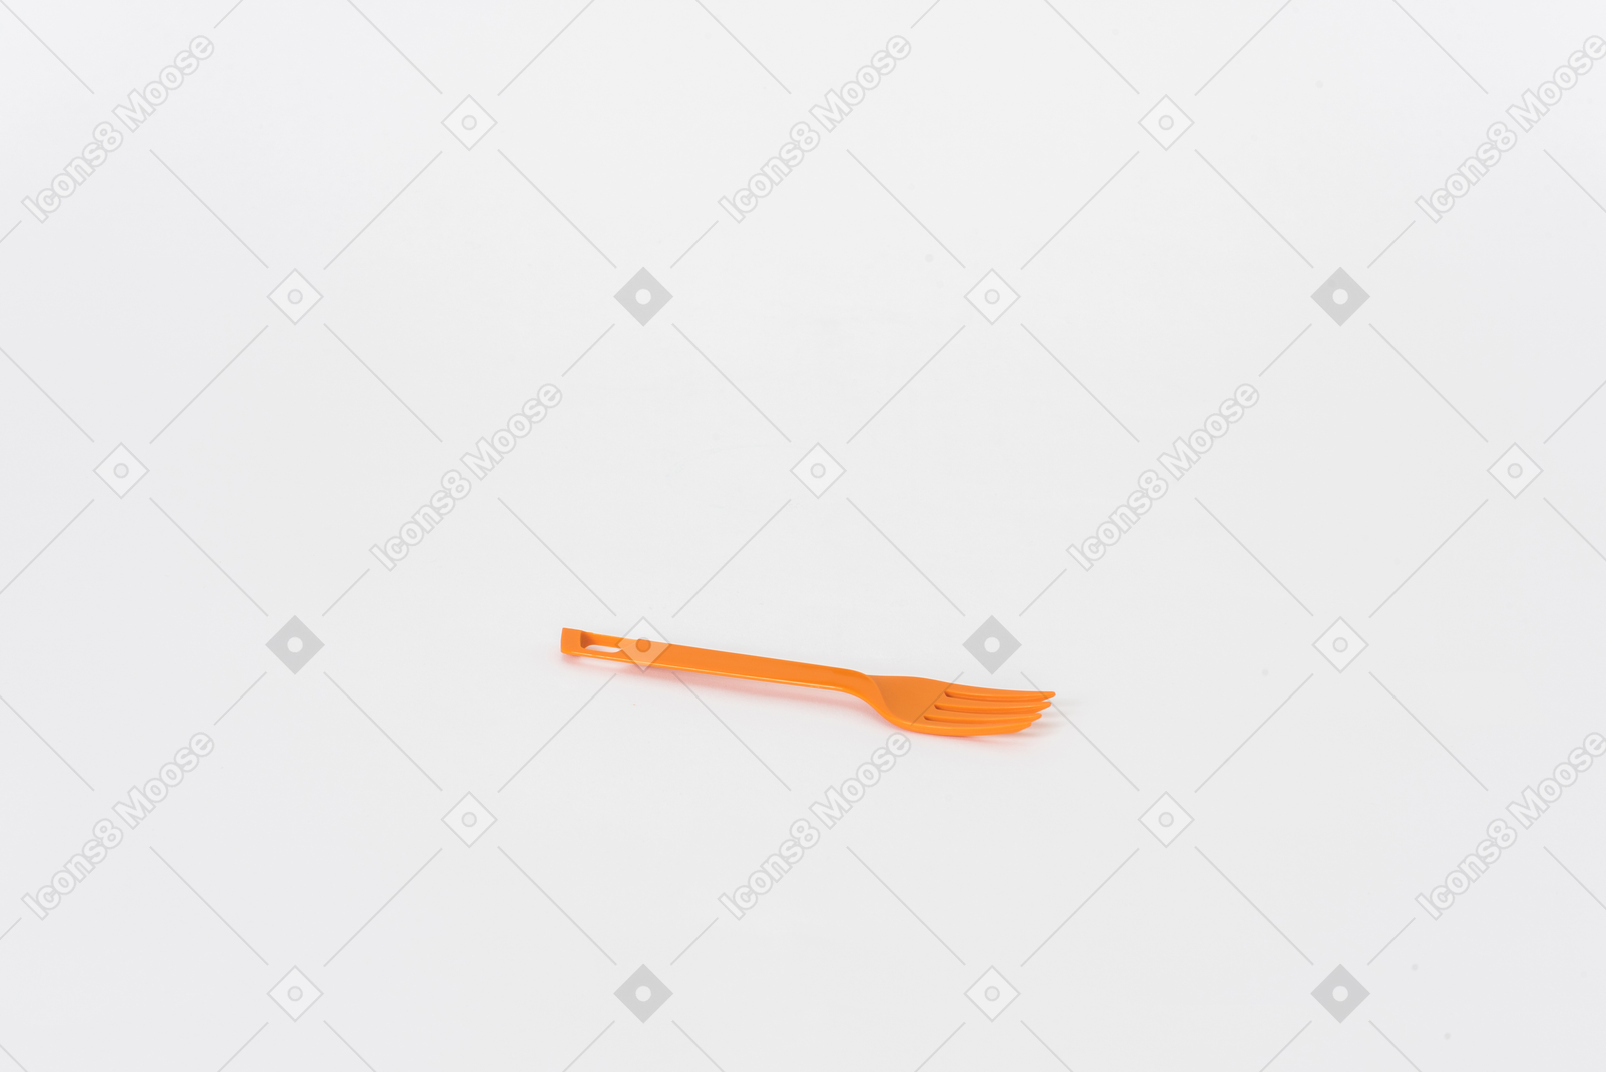 Plastic orange fork on a white background